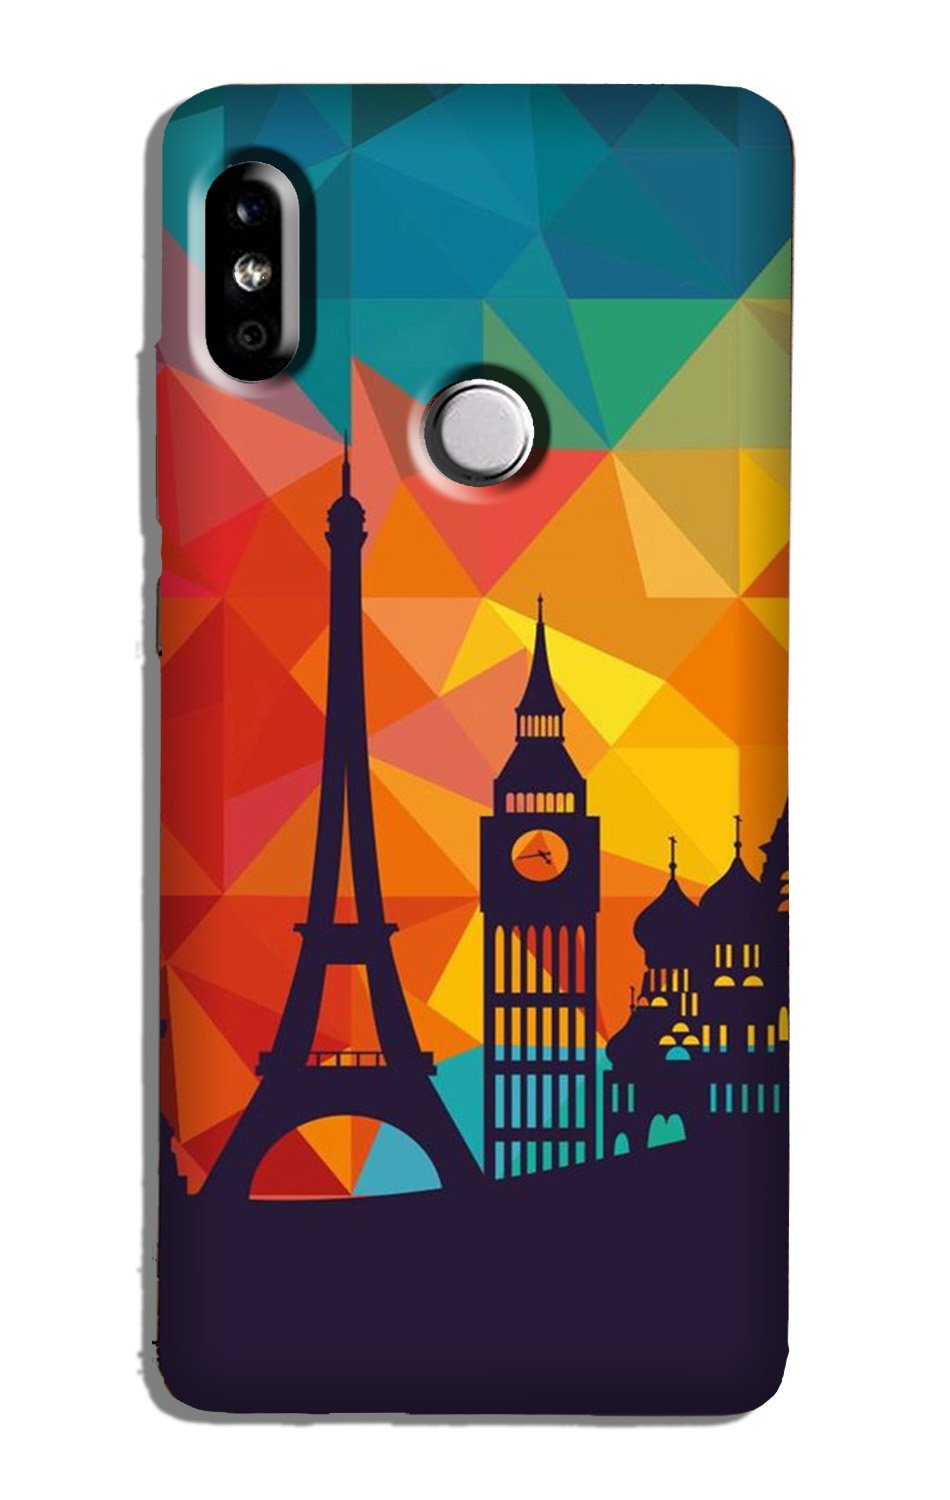 Eiffel Tower2 Case for Xiaomi Redmi 7